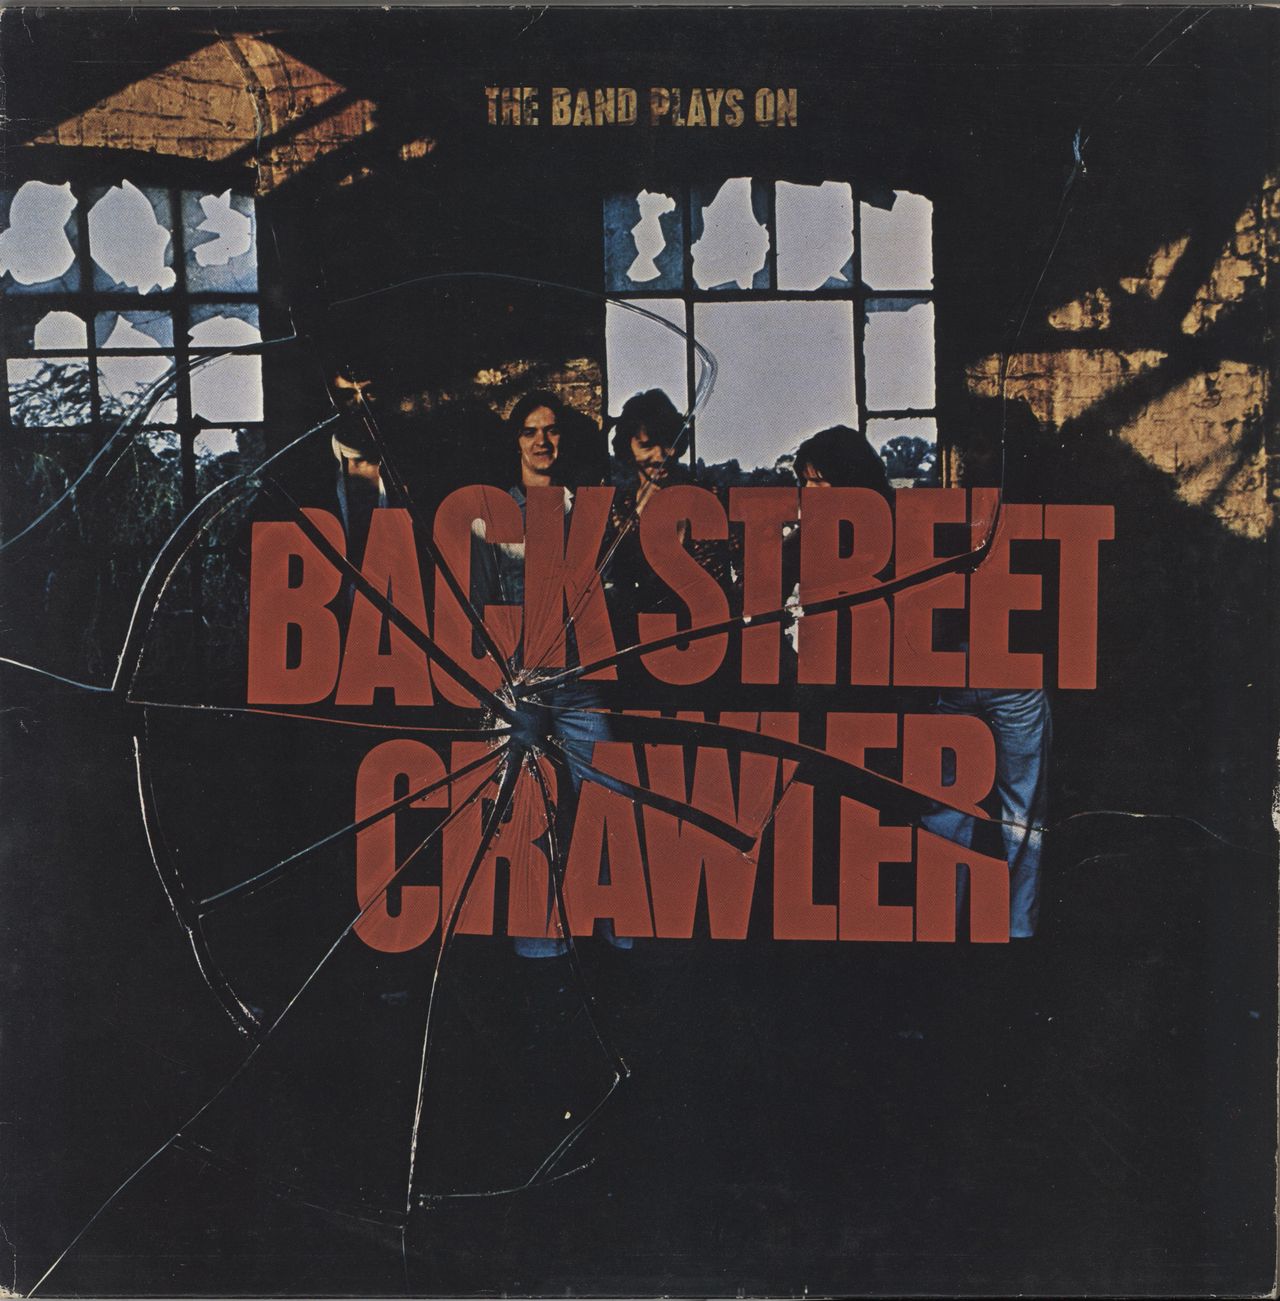 Back Street Crawler The Band Plays On UK vinyl LP album (LP record) K50173